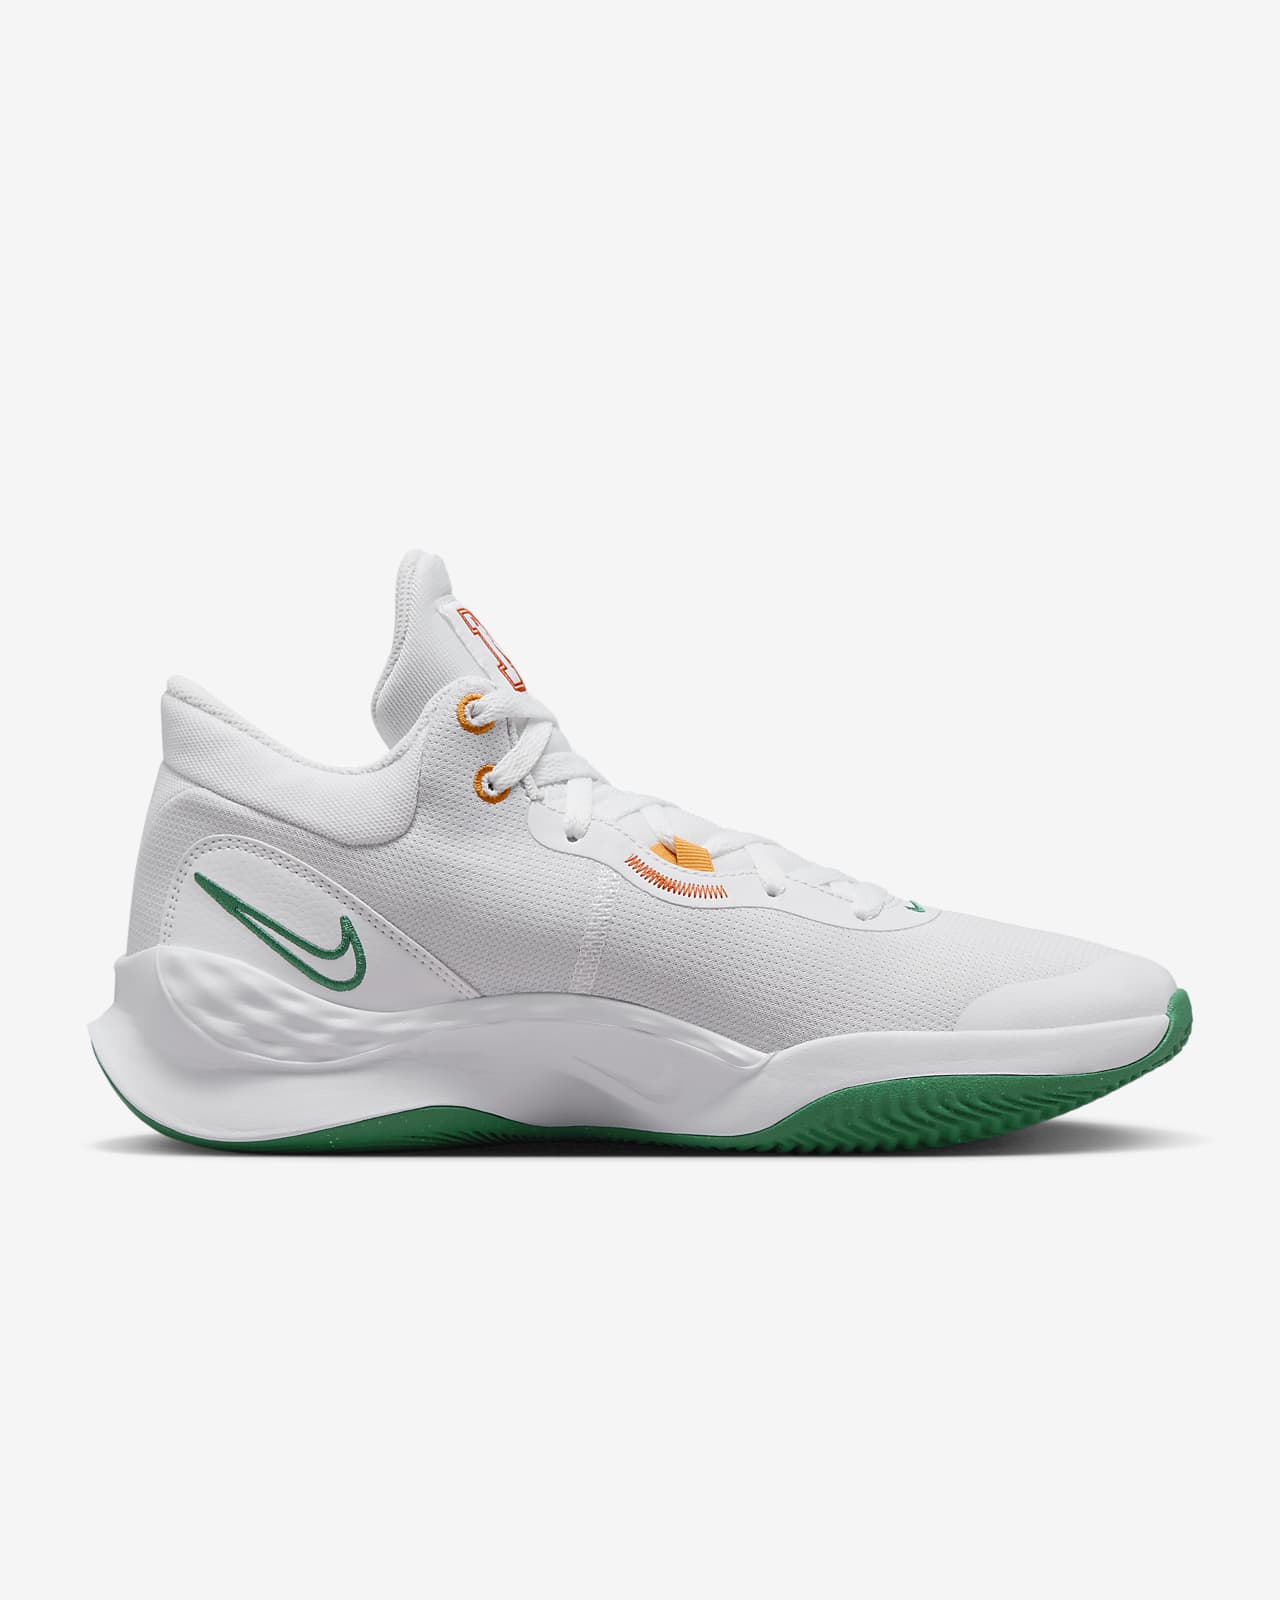 Nike Elevate 3 Basketball Shoes